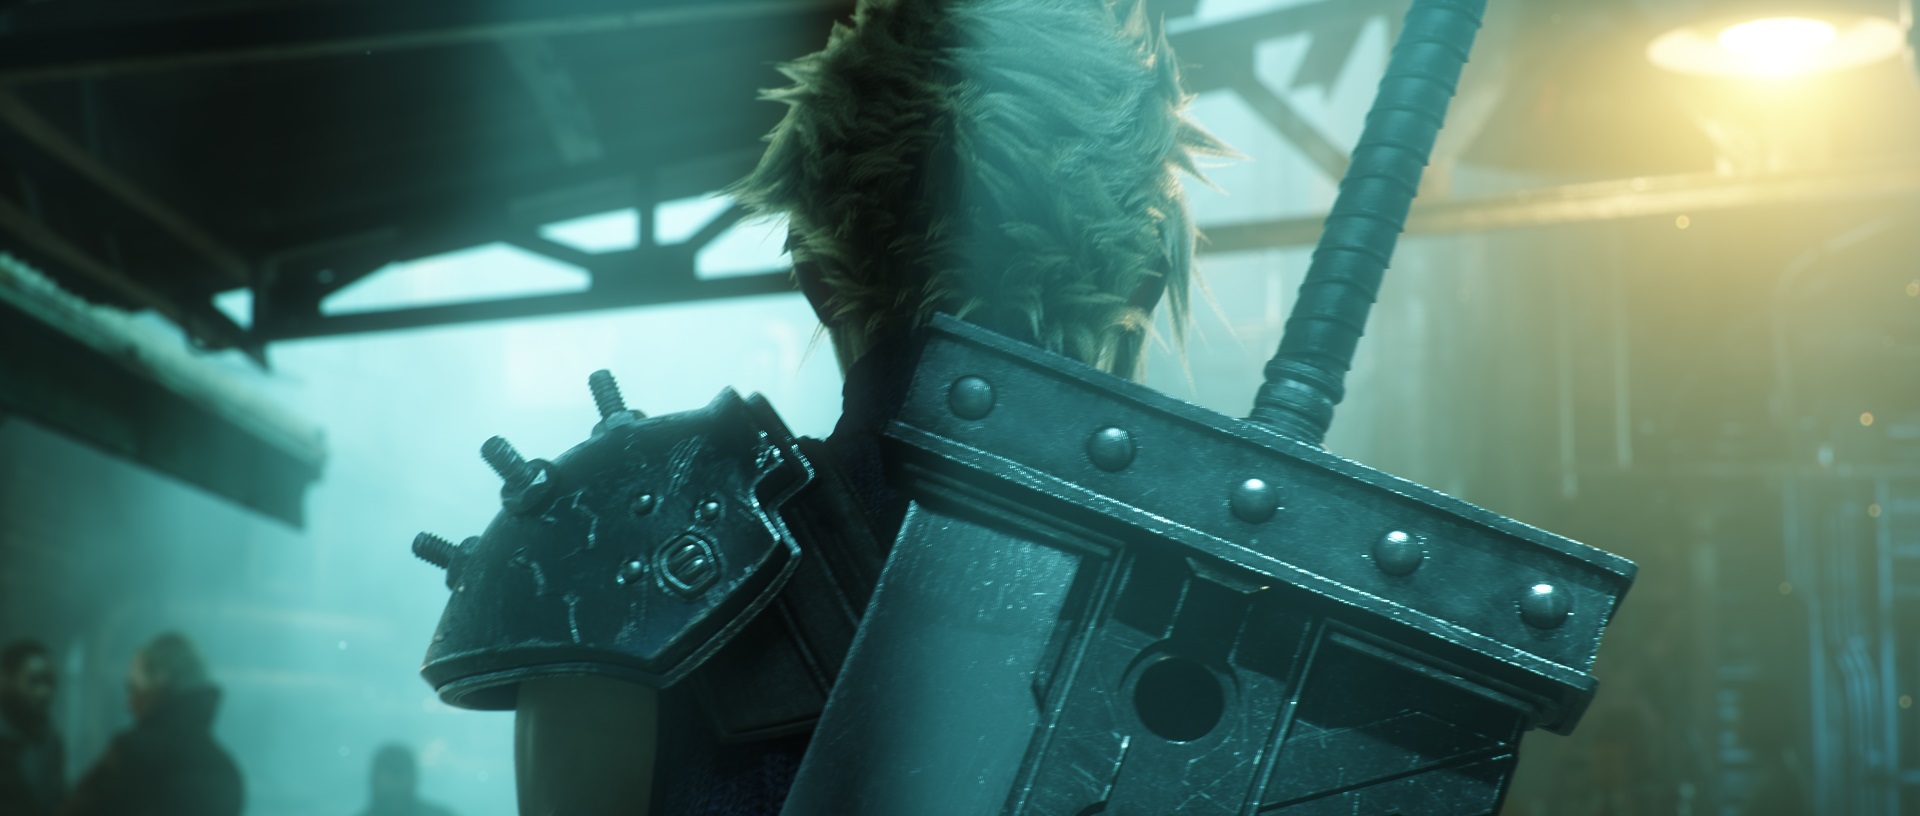 Final Fantasy VII Remake: rivelata la data d’uscita